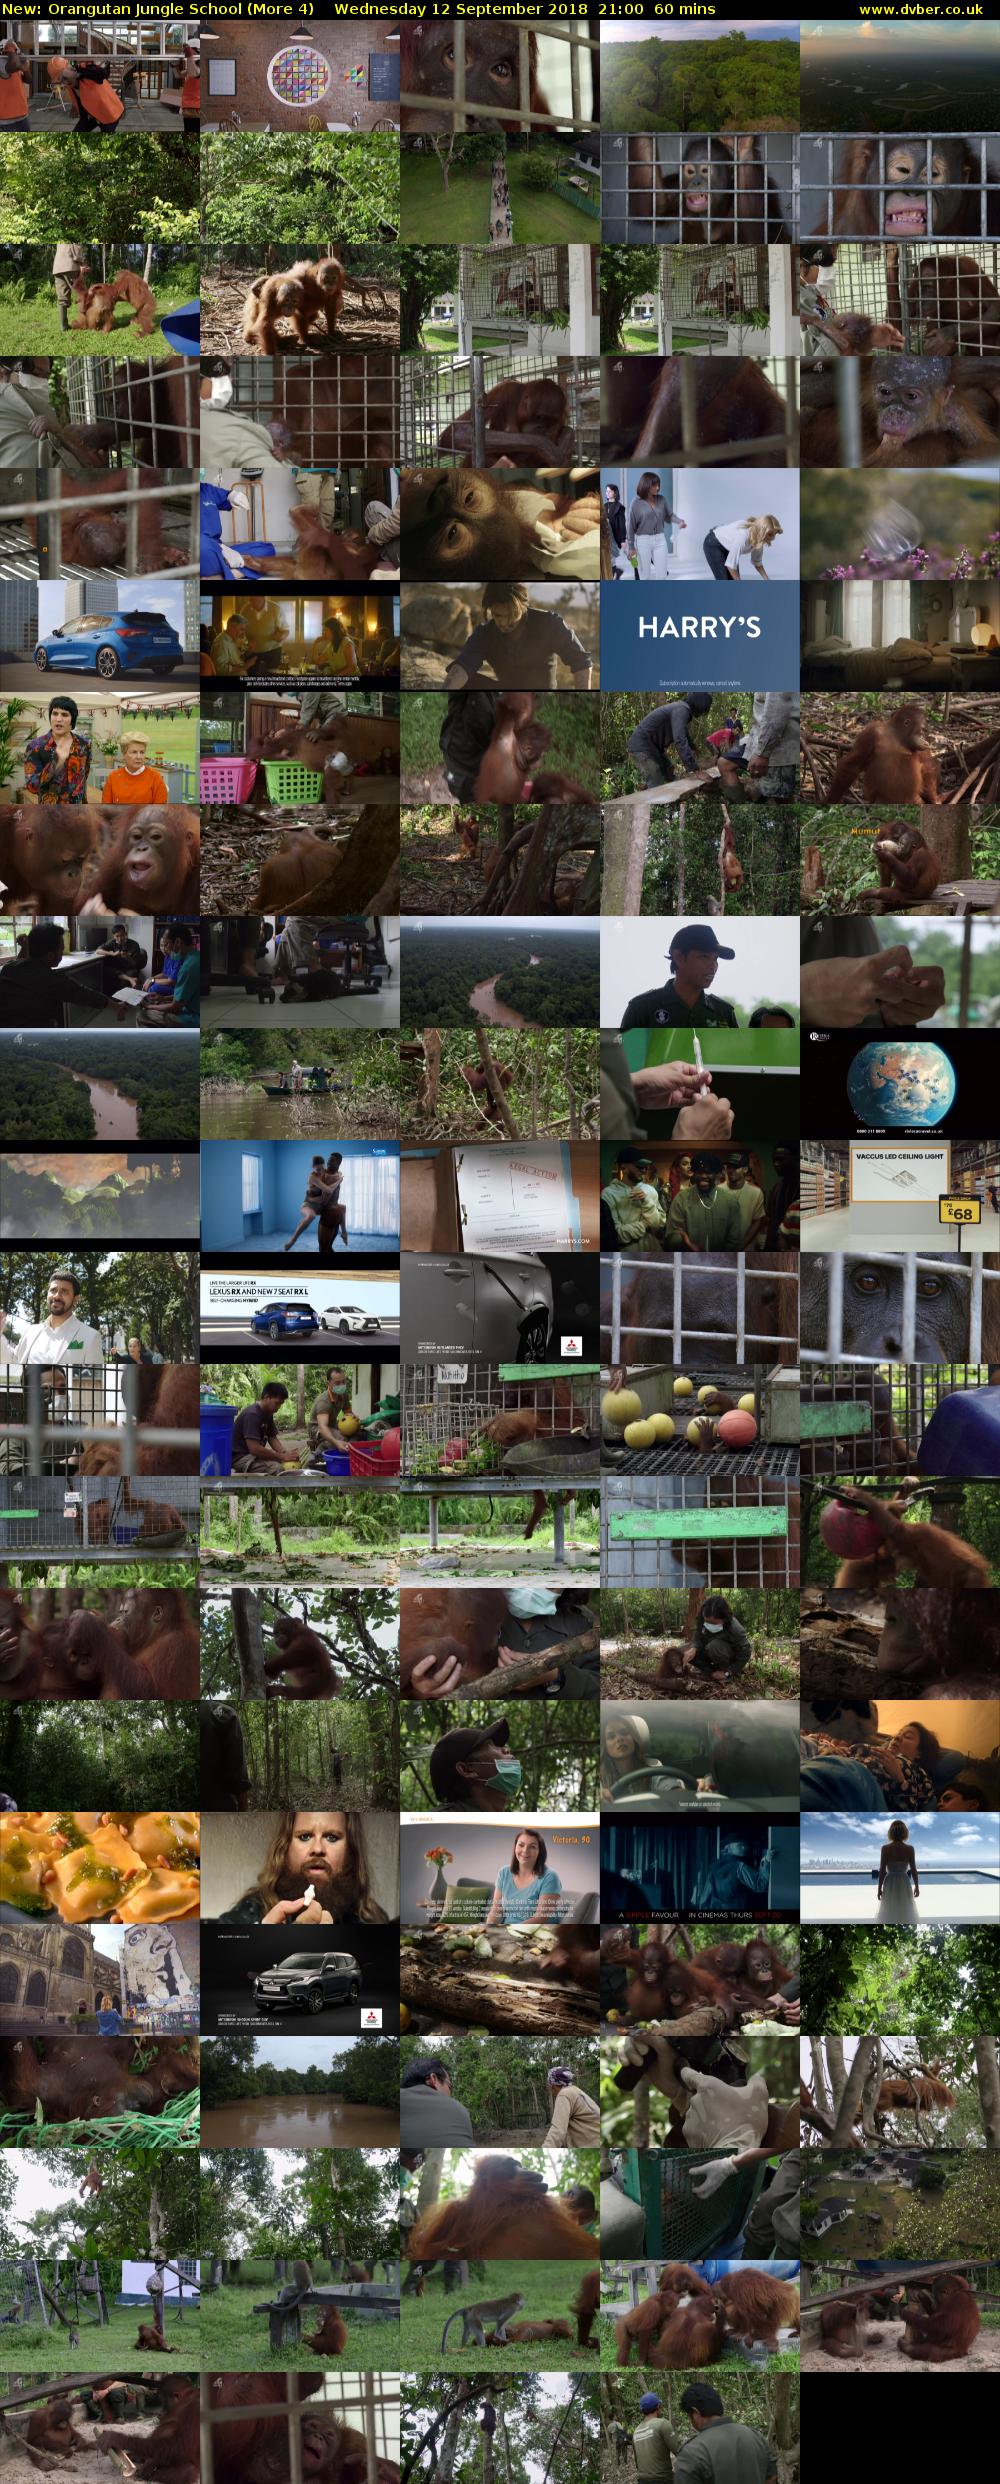 Orangutan Jungle School (More 4) Wednesday 12 September 2018 21:00 - 22:00